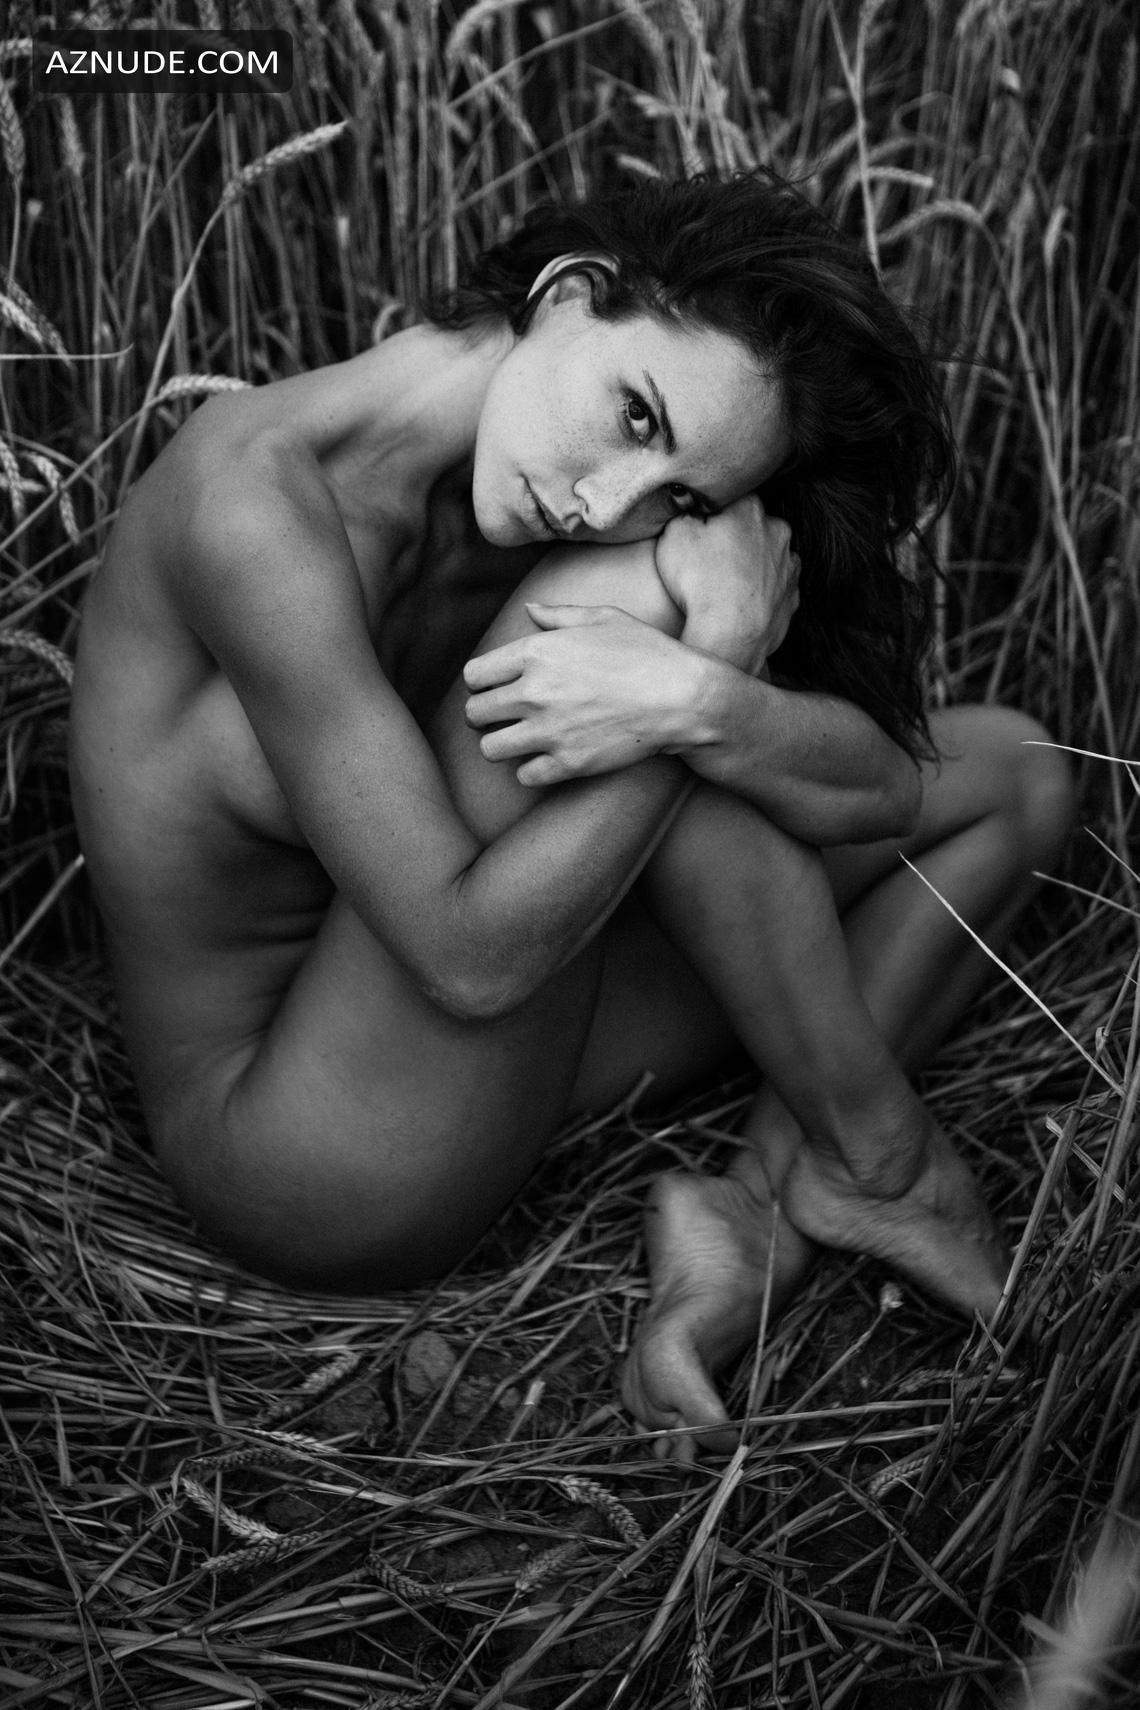 Andja Lorein Naked By Nicolas Larriere Aznude